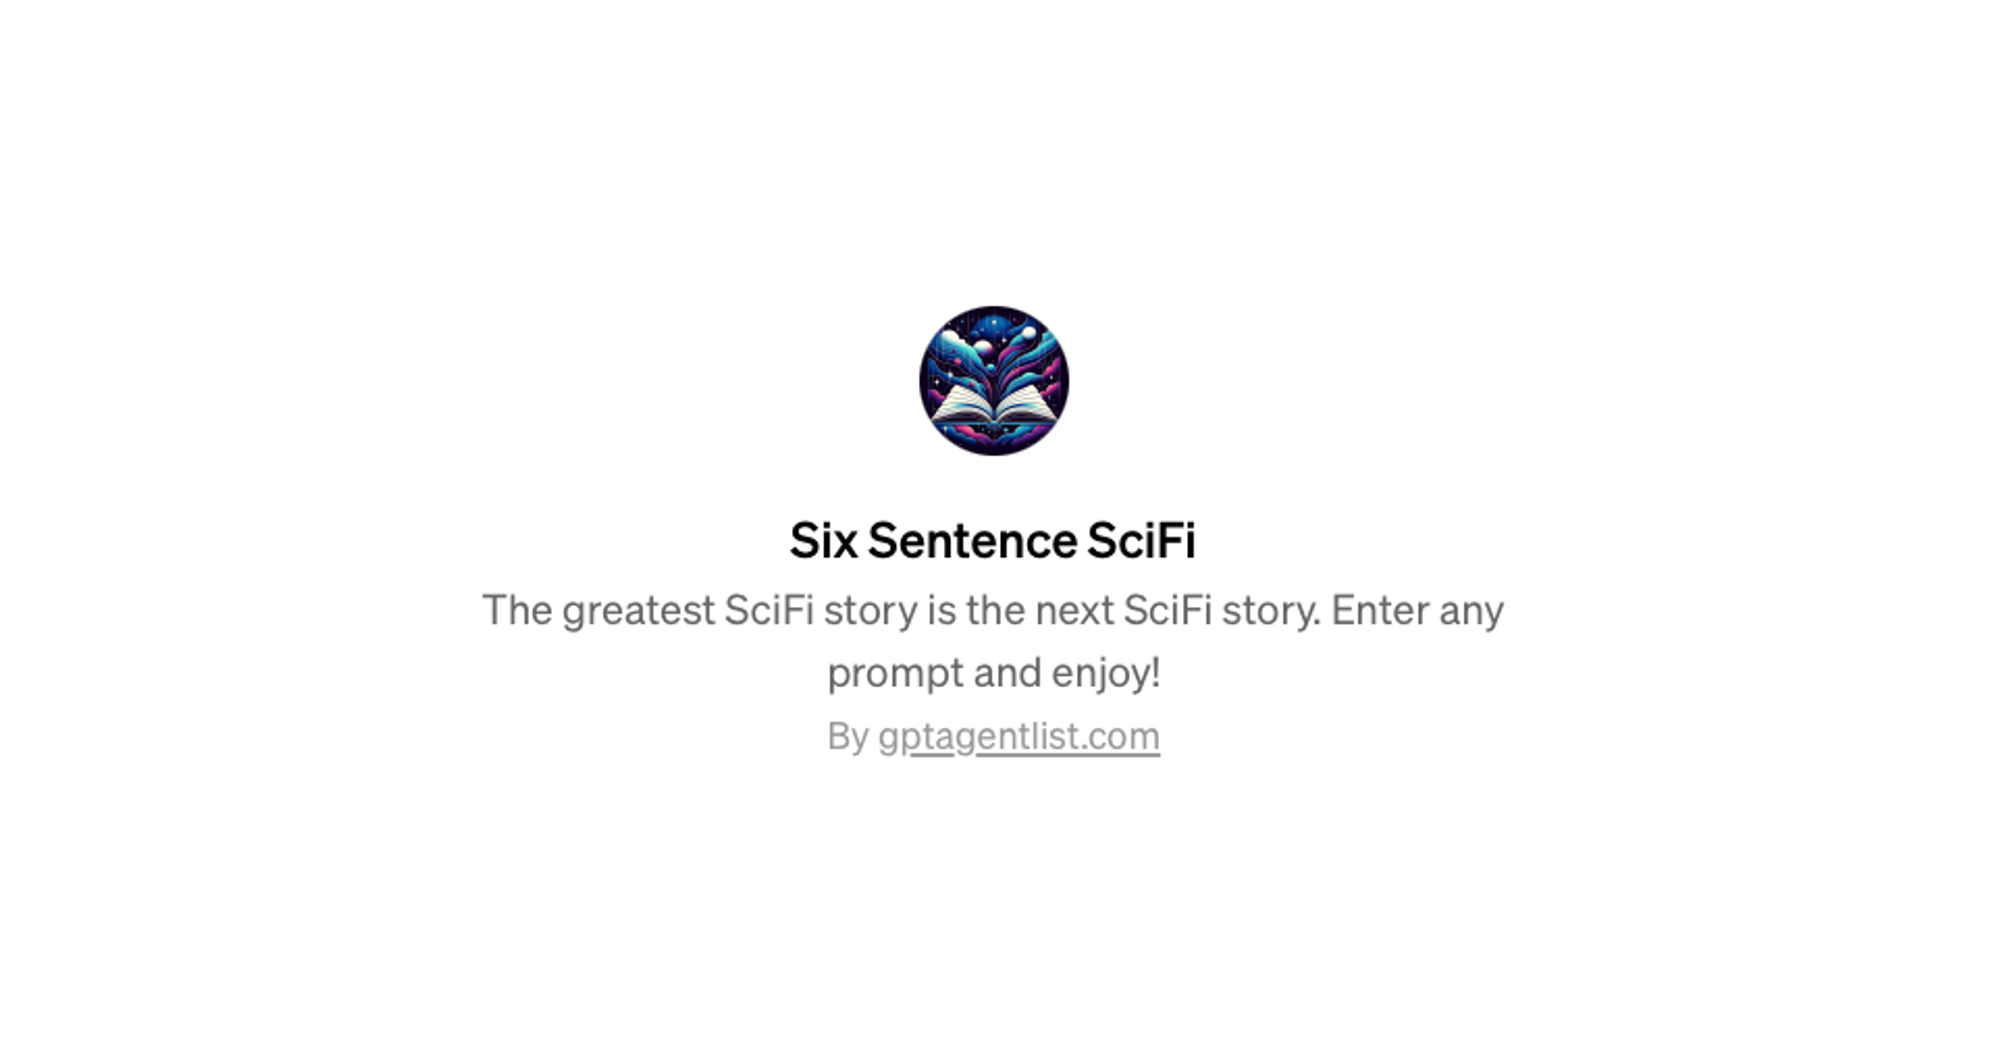 Six Sentence SciFI